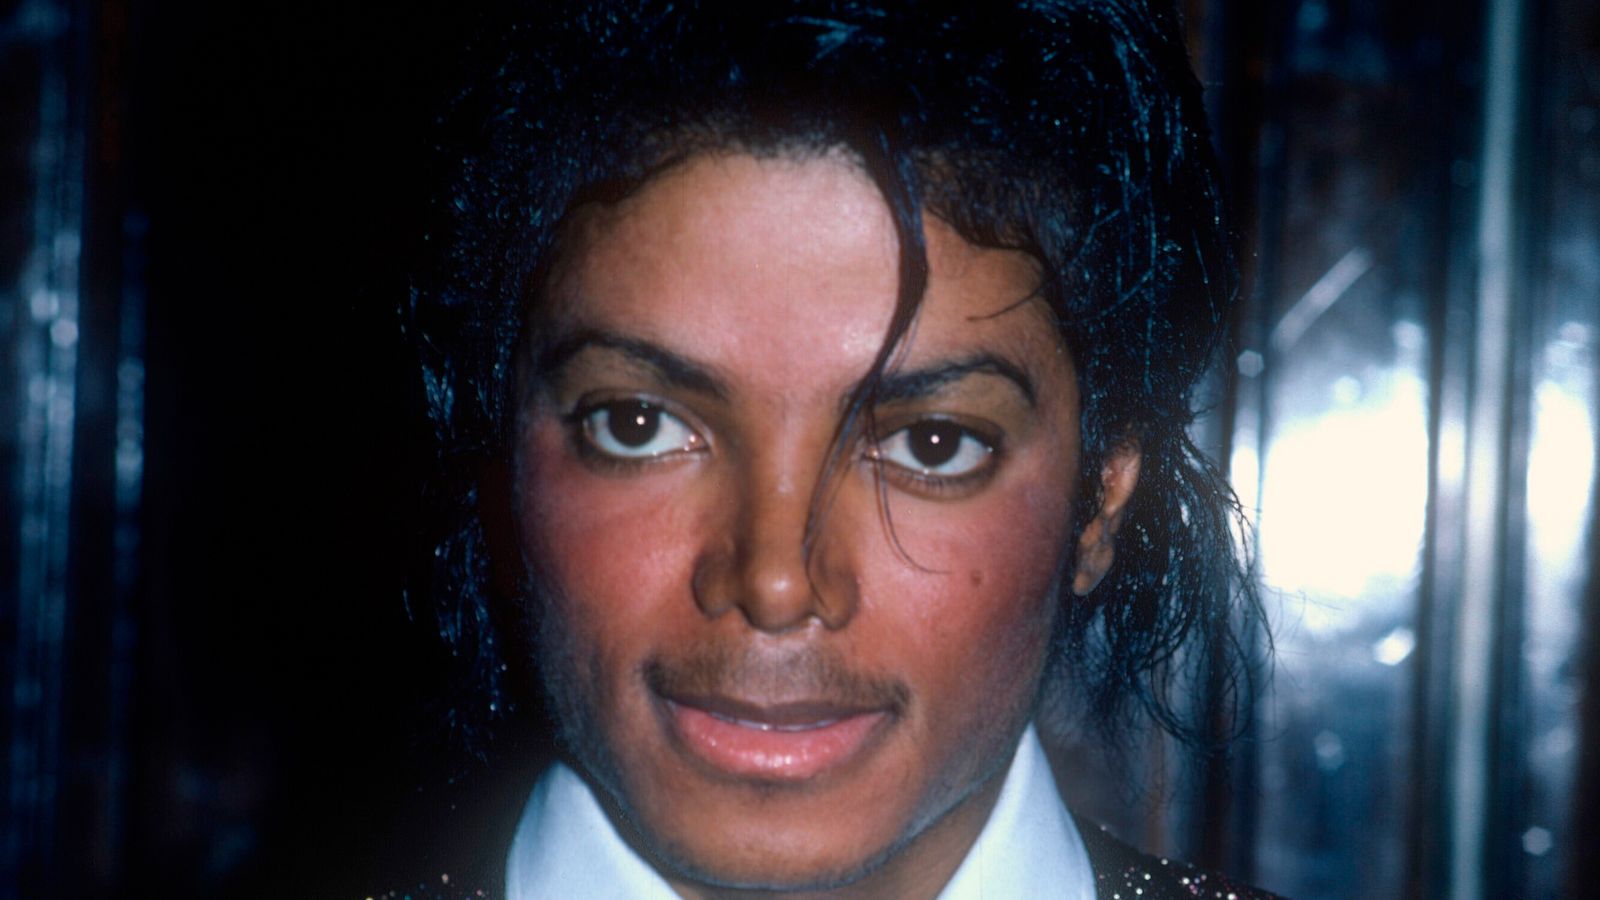 Куртка Майкла Джексона из рекламы Pepsi 1984 года продана на аукционе за 250 000 фунтов стерлингов |  Новости Великобритании